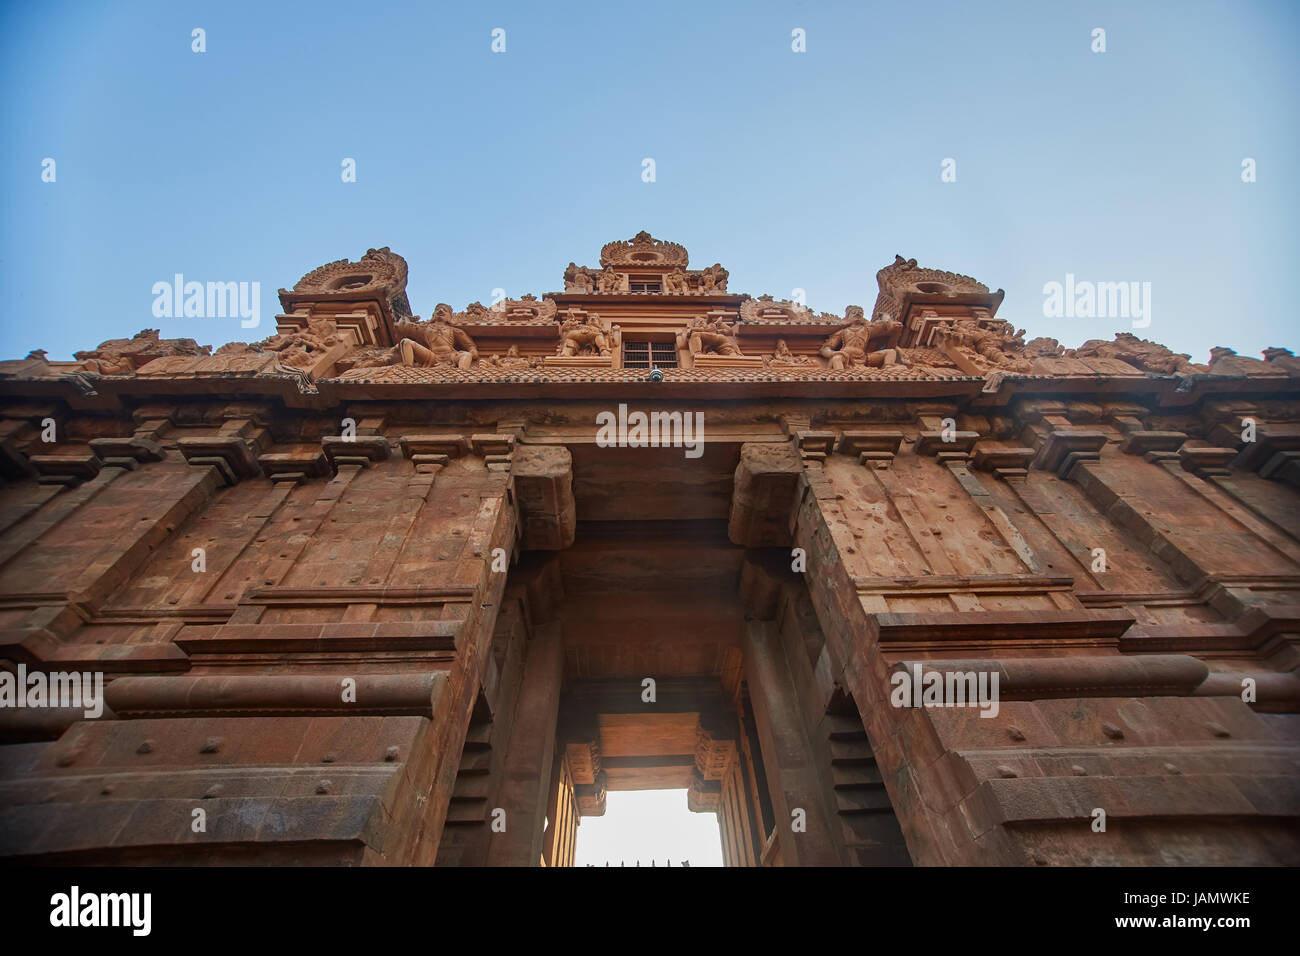 Tempio Brihadeeswara a Thanjavur, Tamil Nadu, India. Uno dei siti del patrimonio mondiale UNESCO. Foto Stock